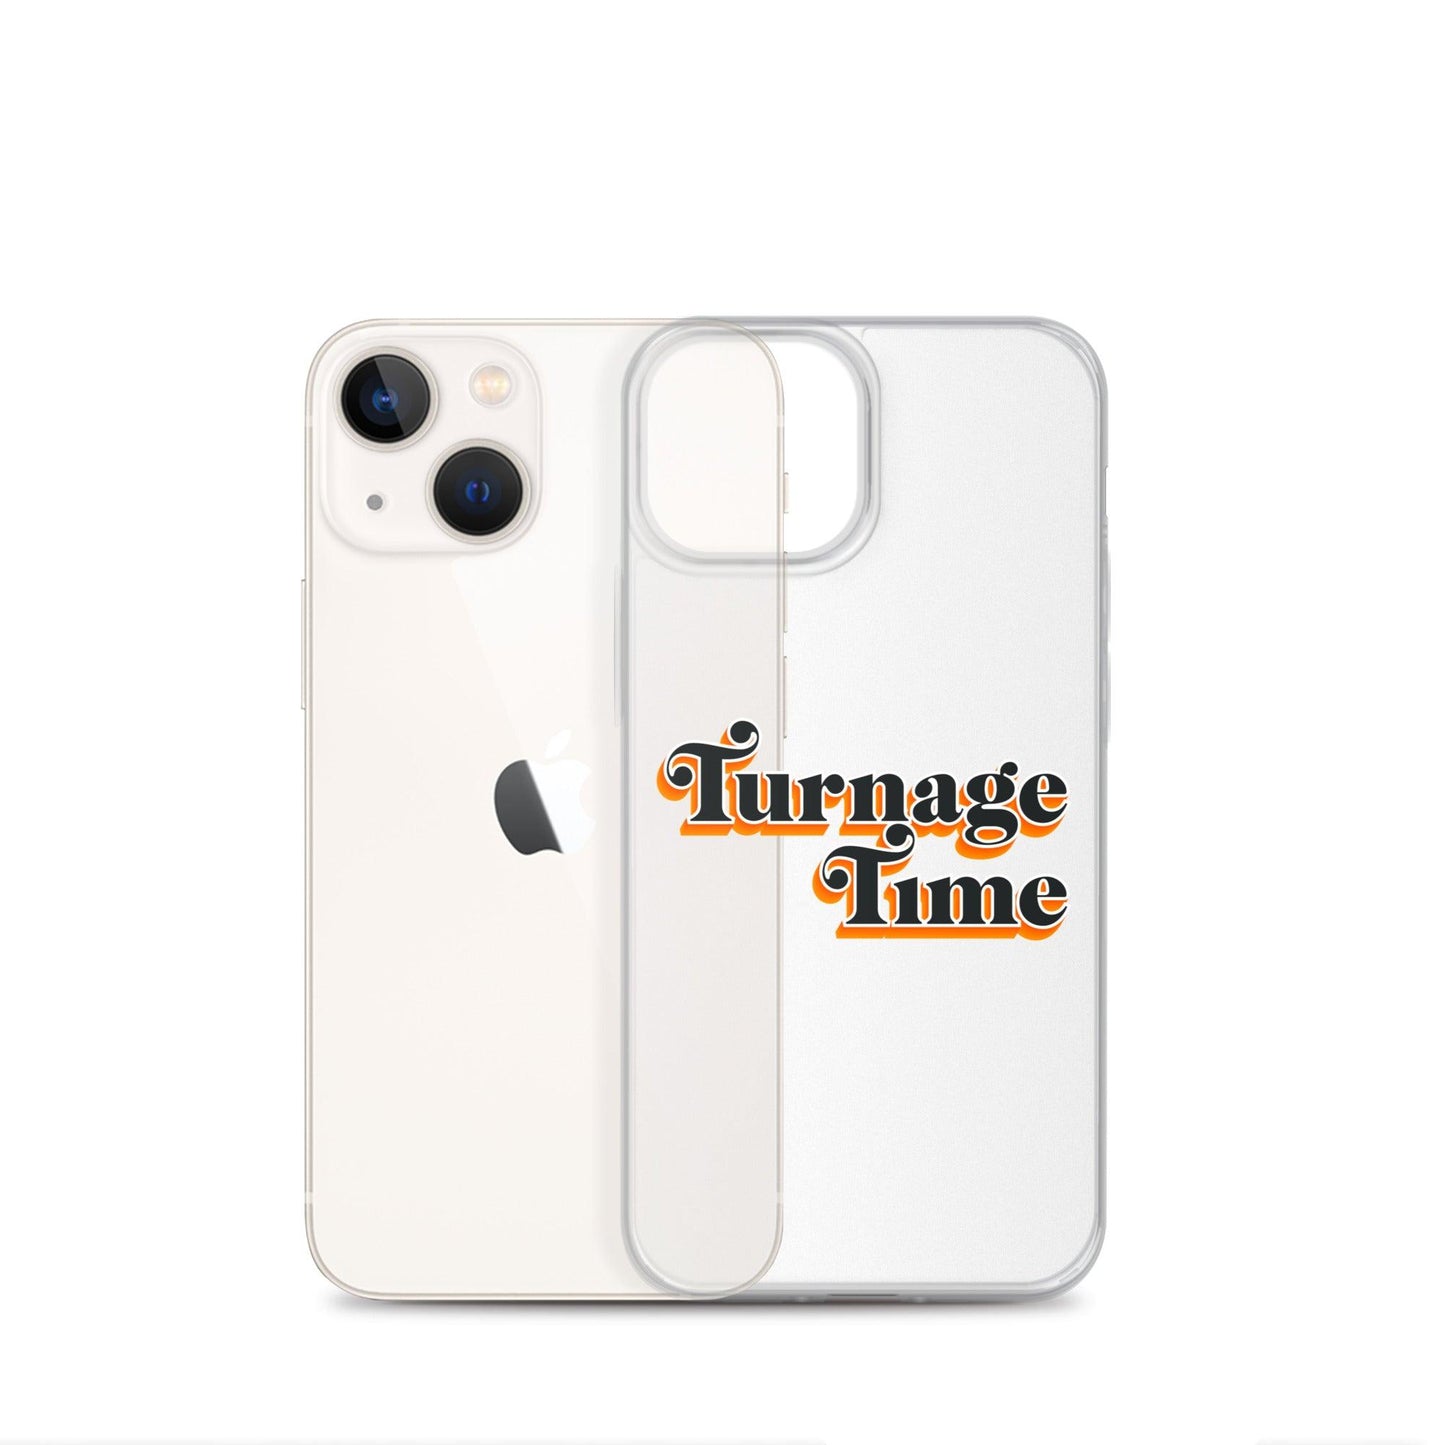 Brandon Turnage "Gametime" iPhone Case - Fan Arch